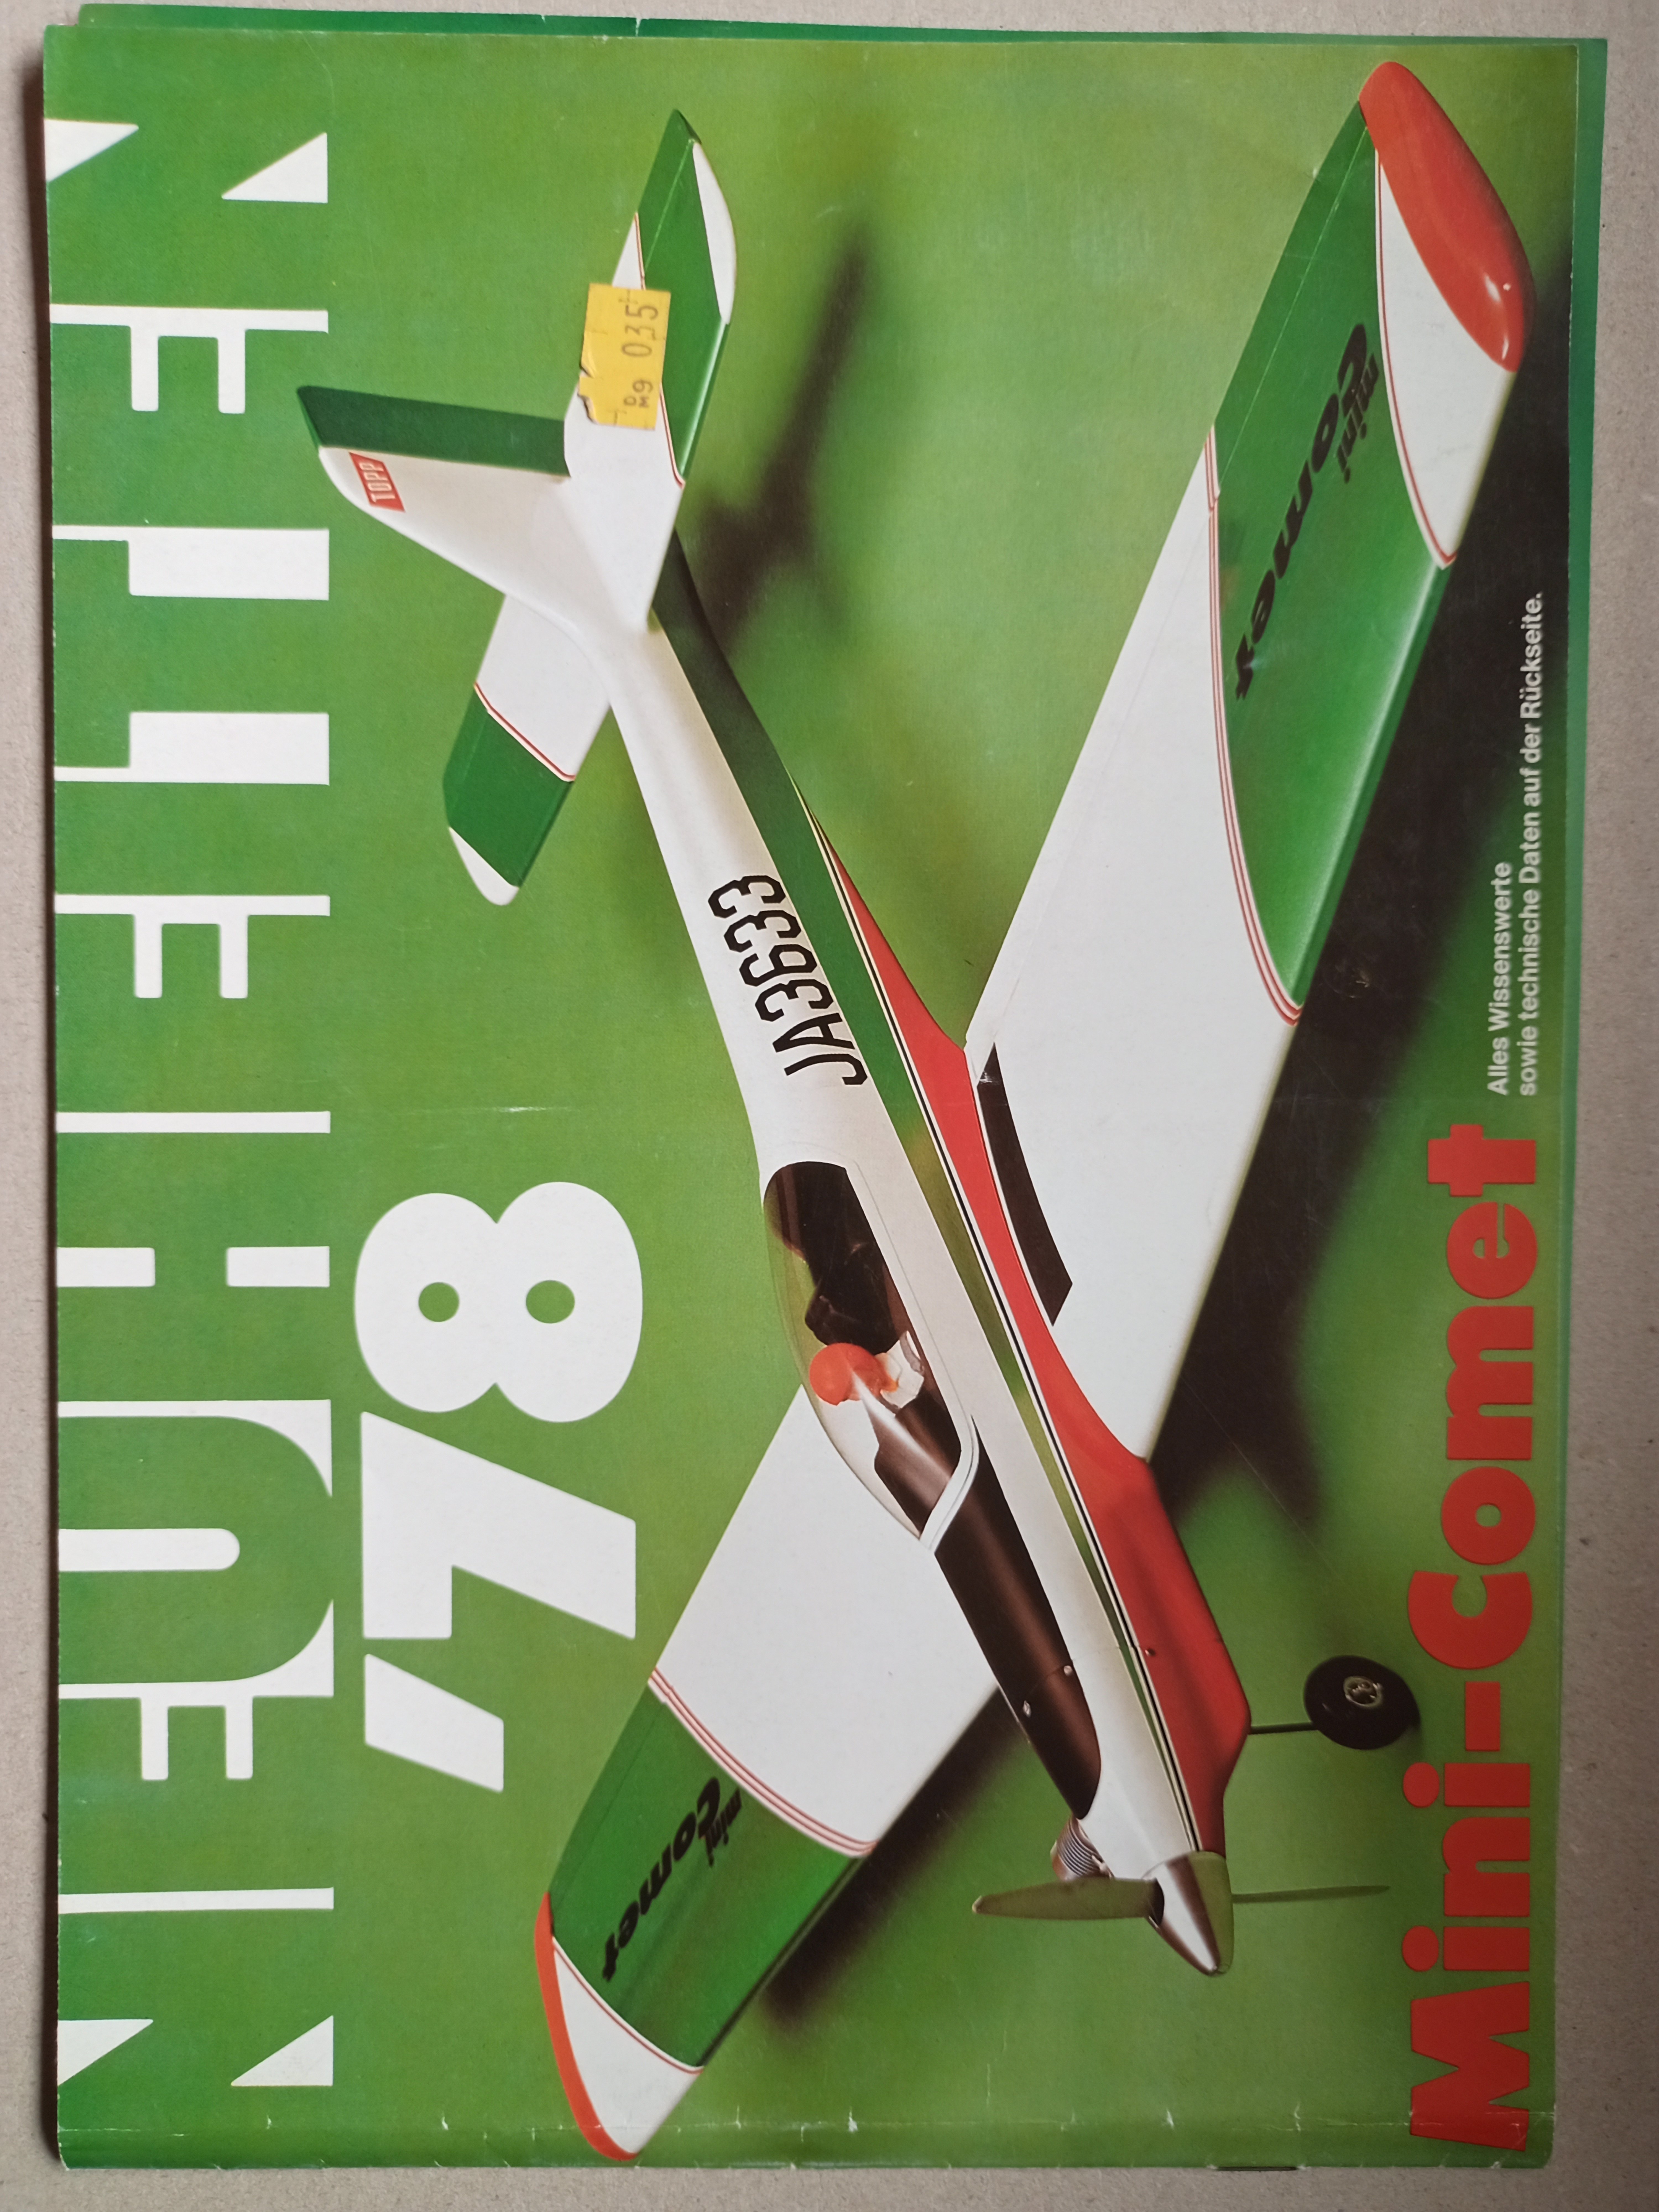 Neuheiten Topp Modelle 1978 (Deutsches Segelflugmuseum mit Modellflug CC BY-NC-SA)